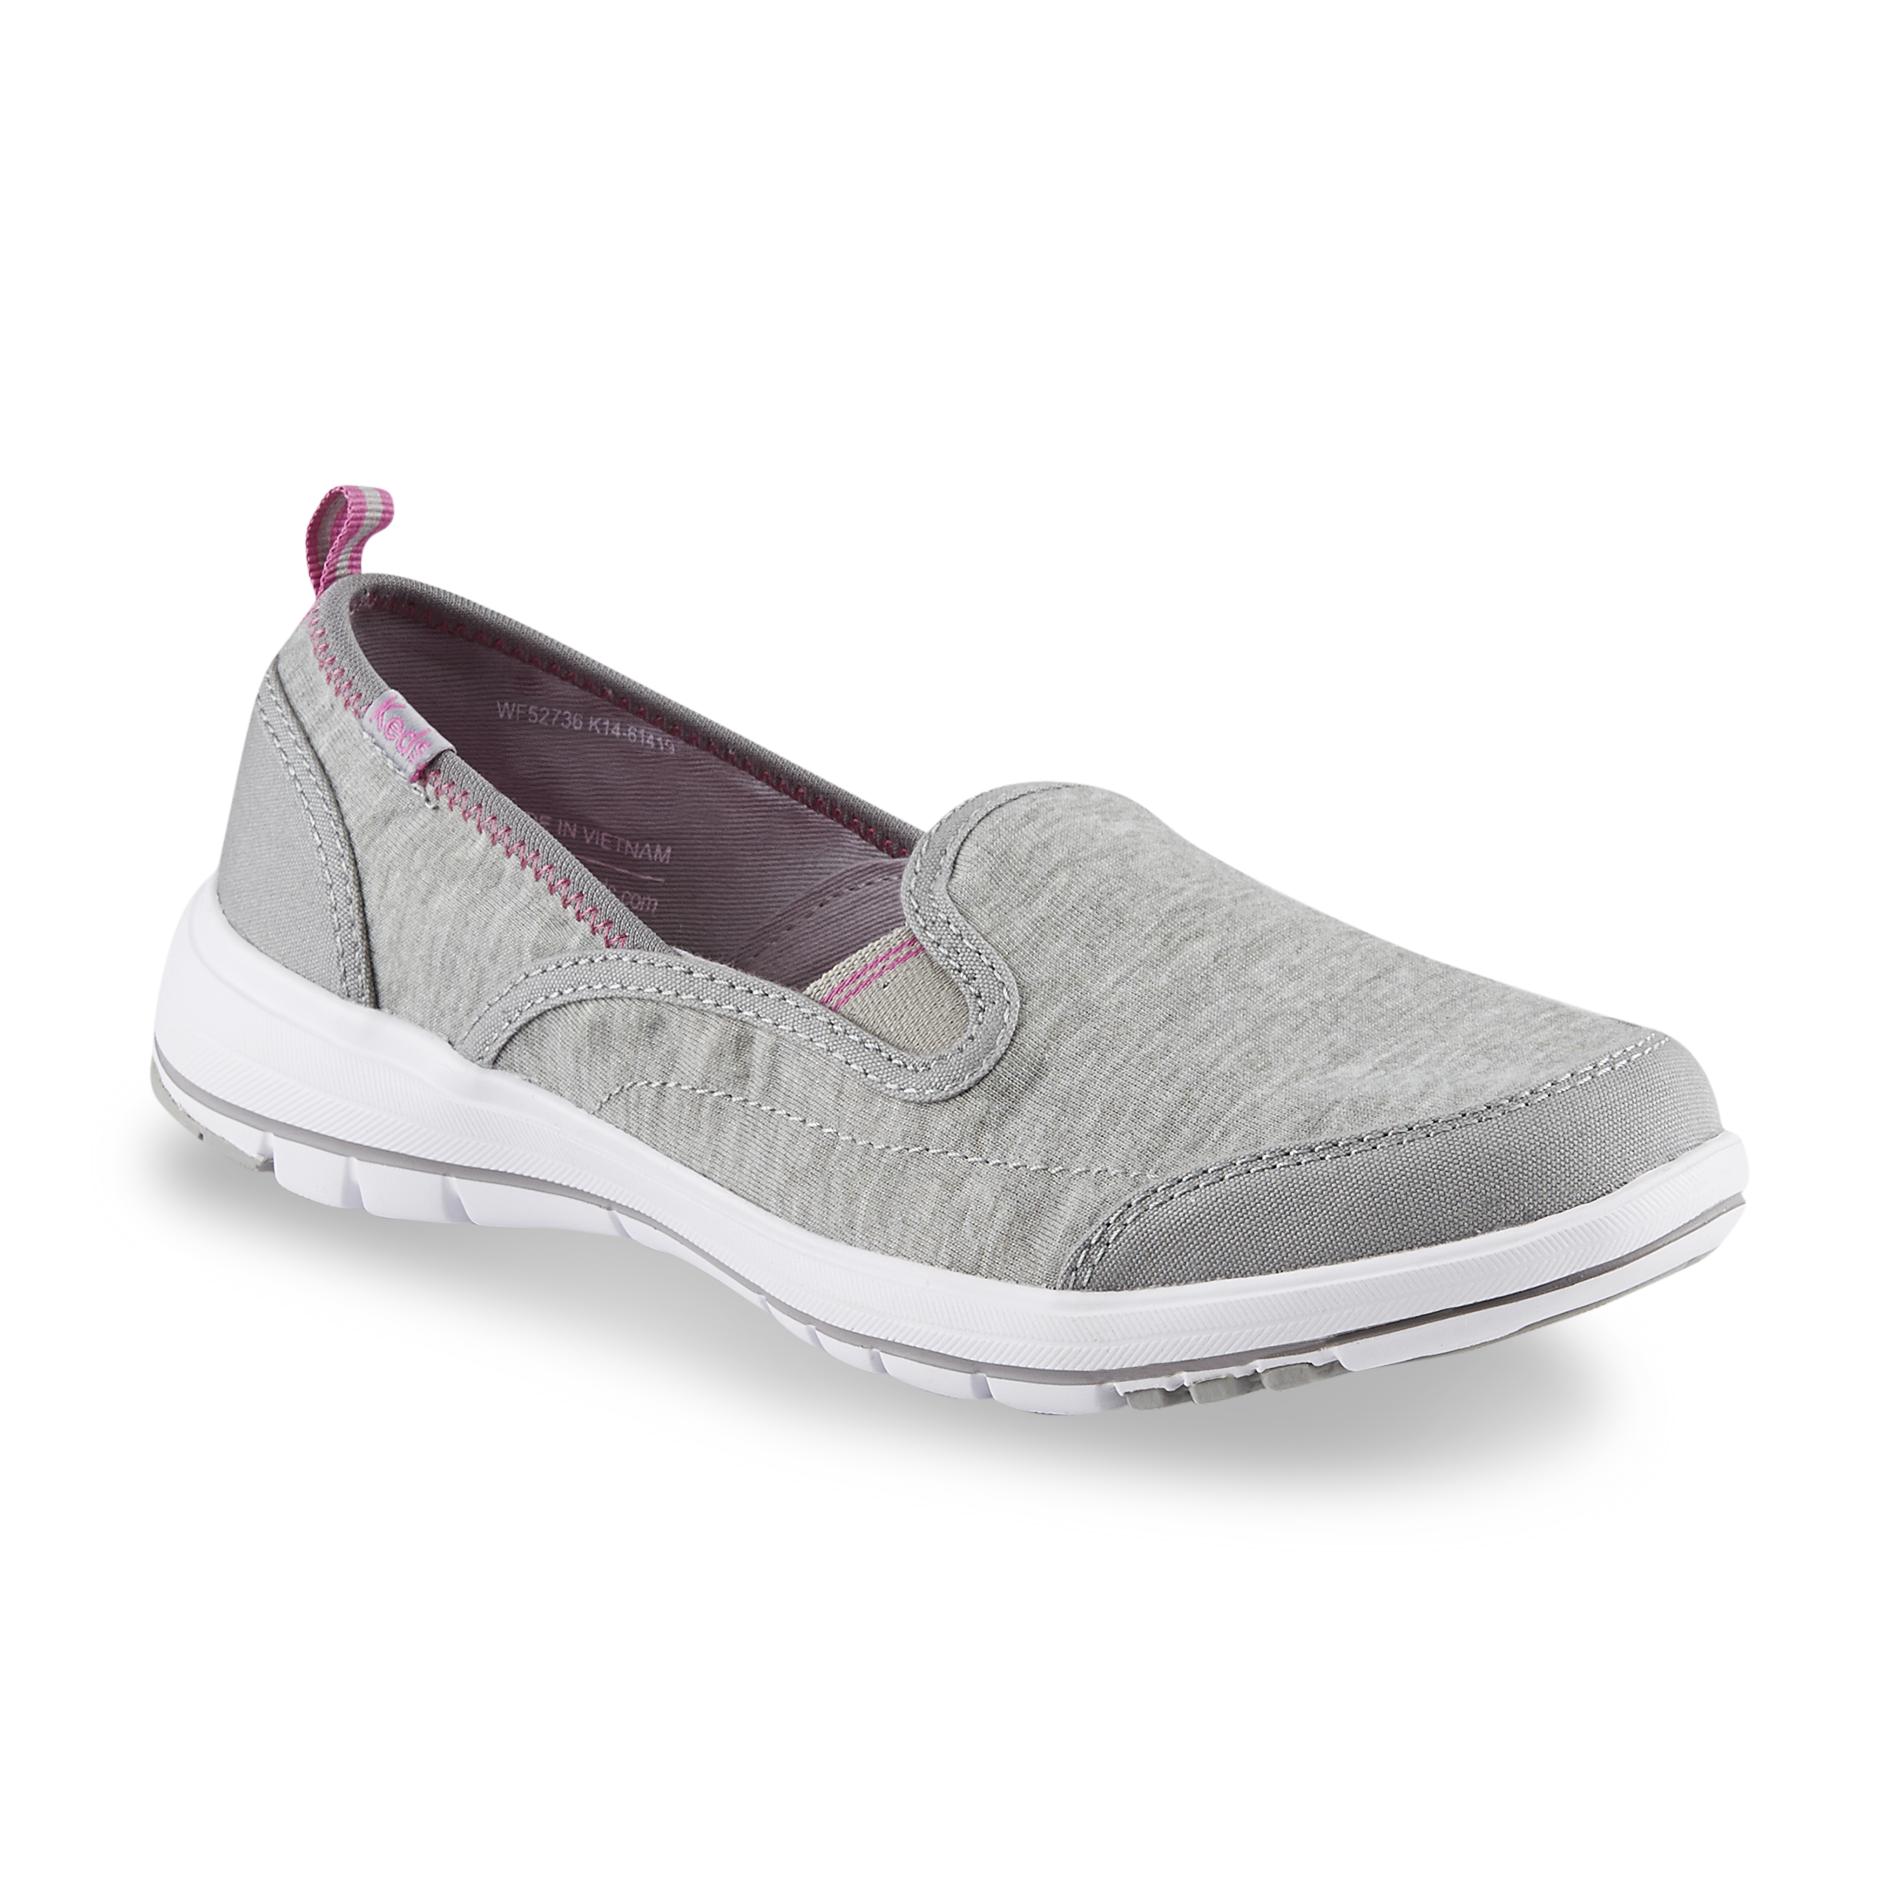 Keds Women's Brisk Gray Slip-On Sneaker | Shop Your Way: Online ...